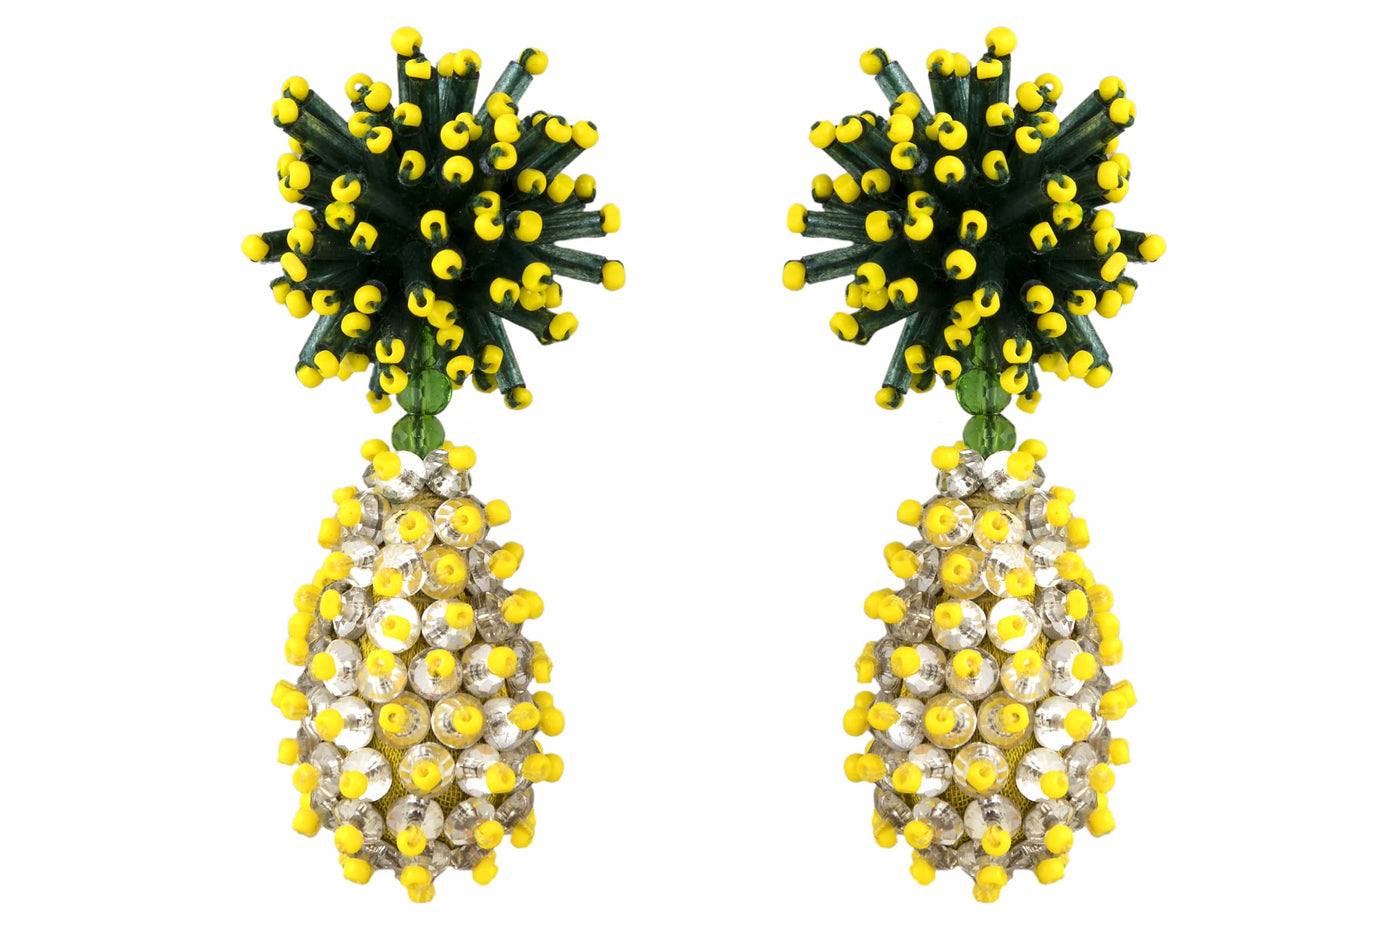 Embroidery Pineapple Earrings